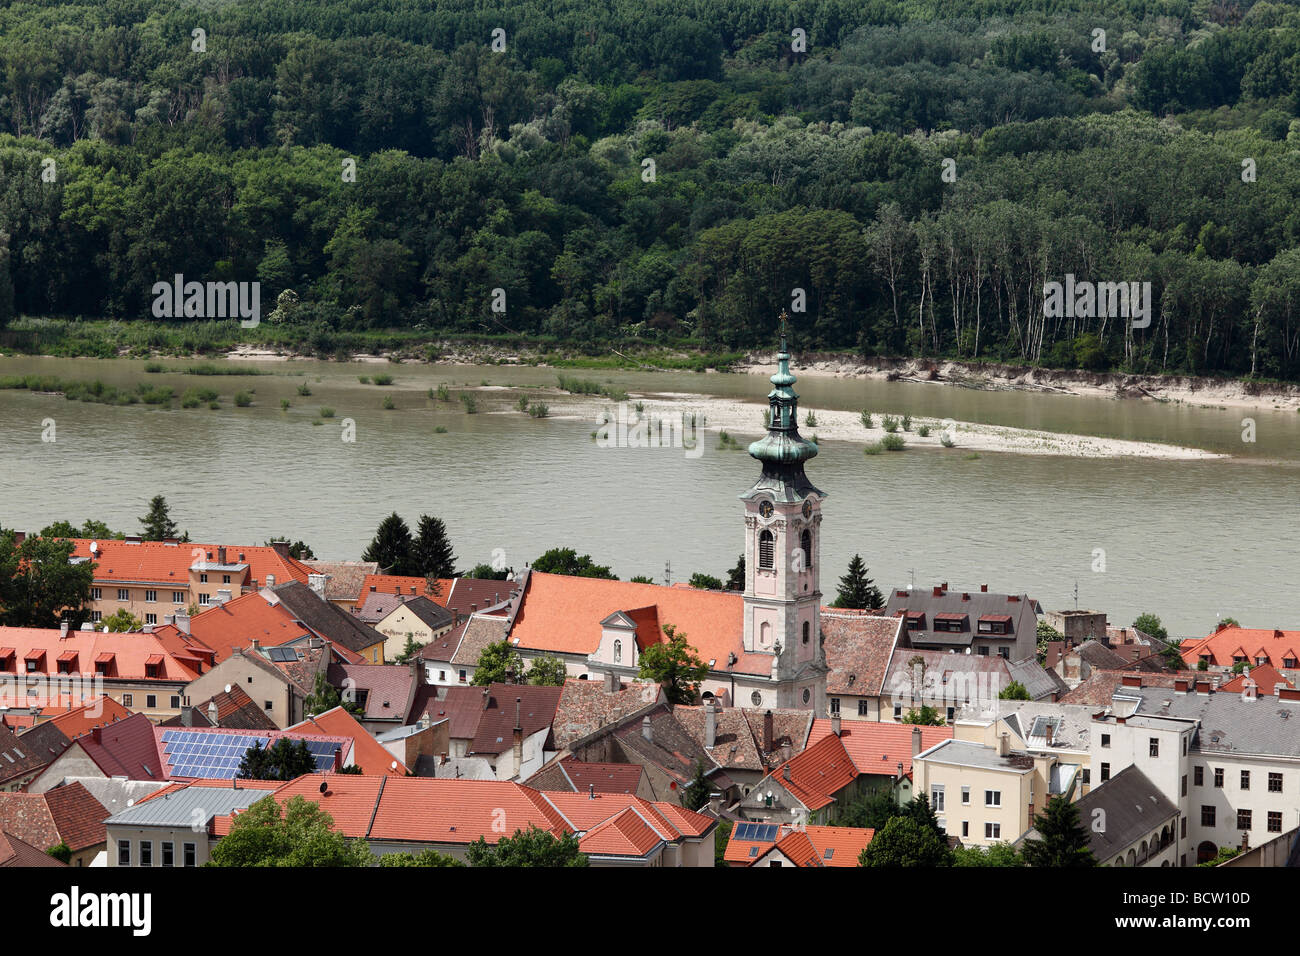 Hainburg An Der Donau Als Single